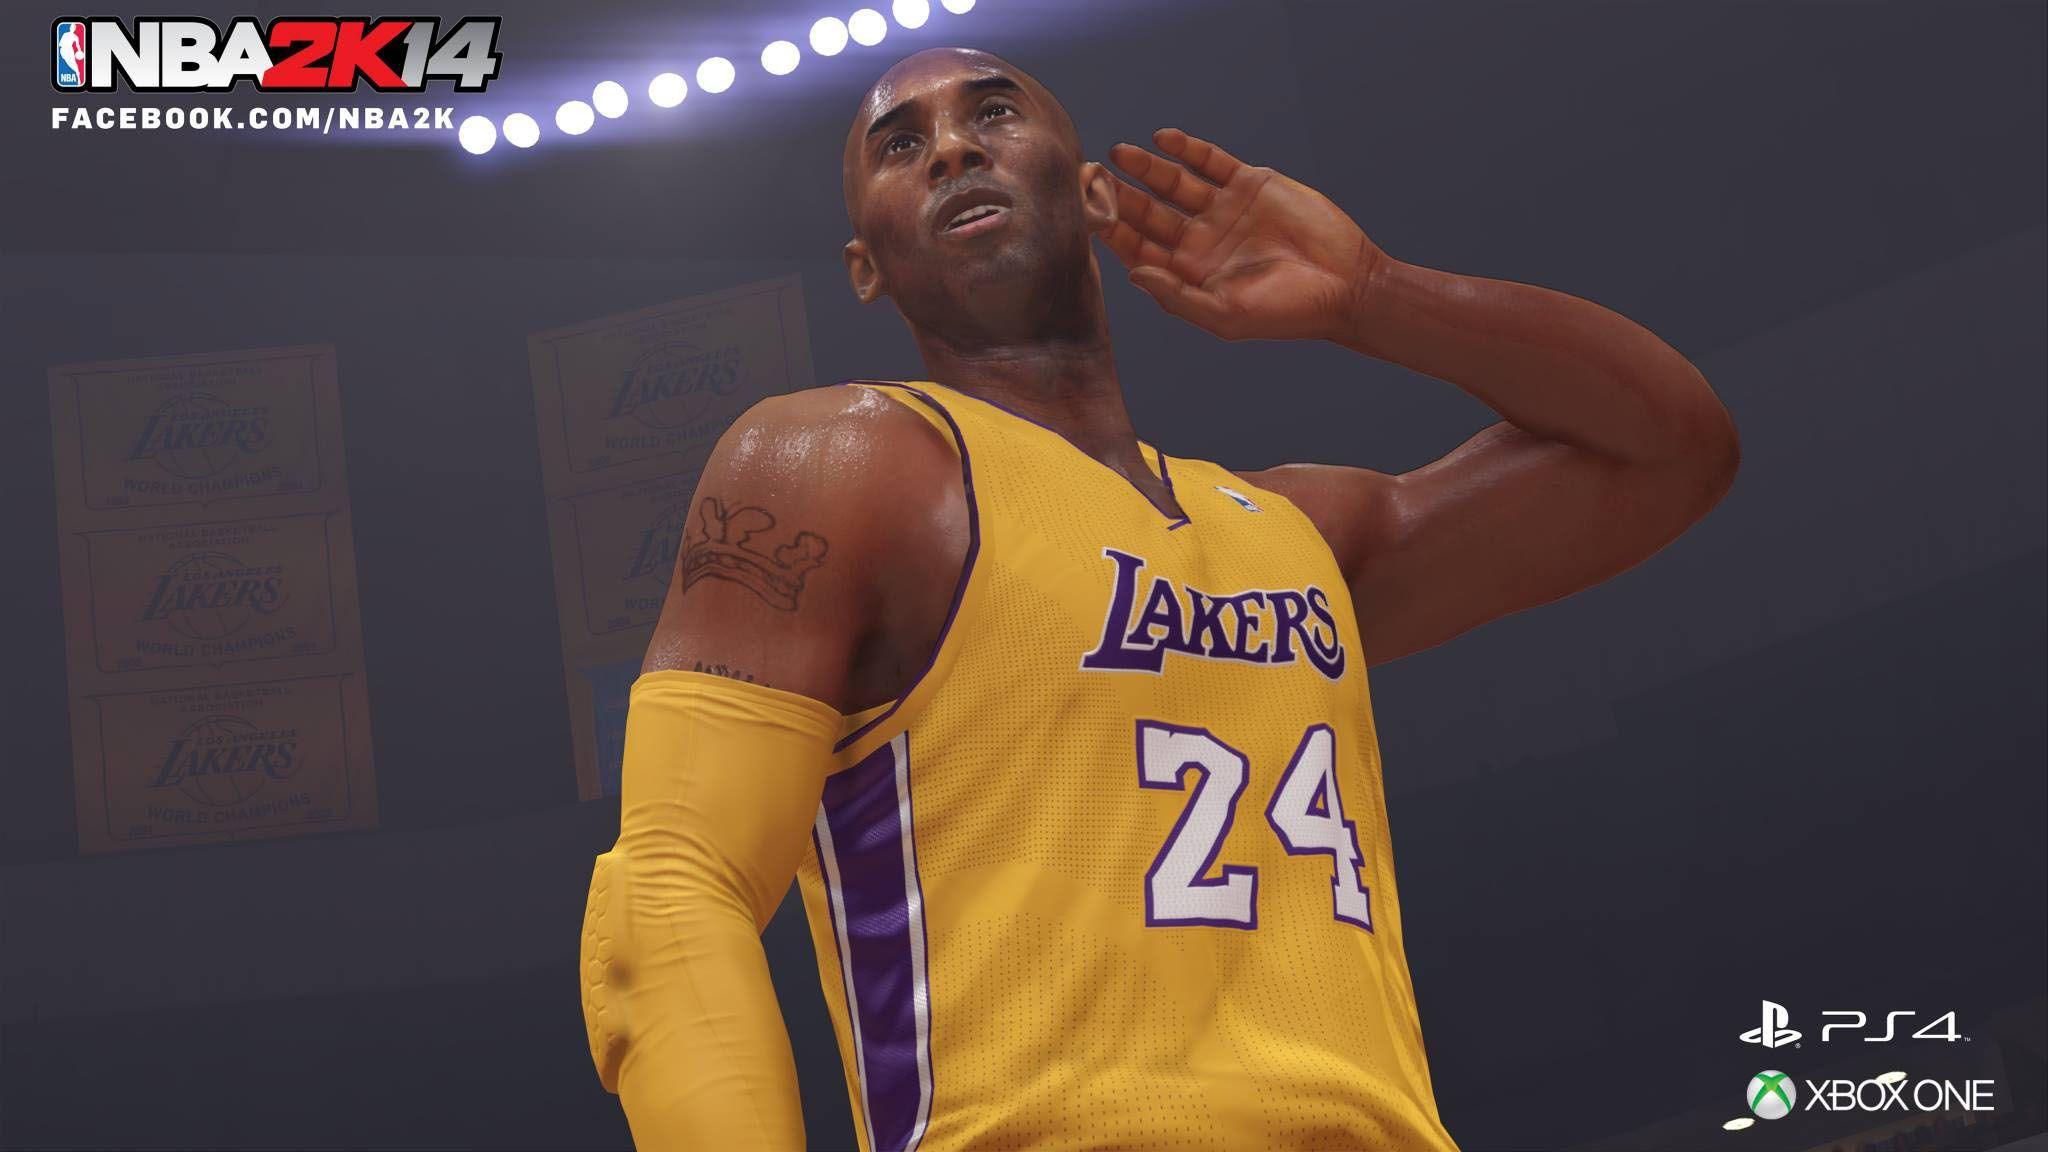 Kobe Bryant, NBA 2K14 on WallpaperMade